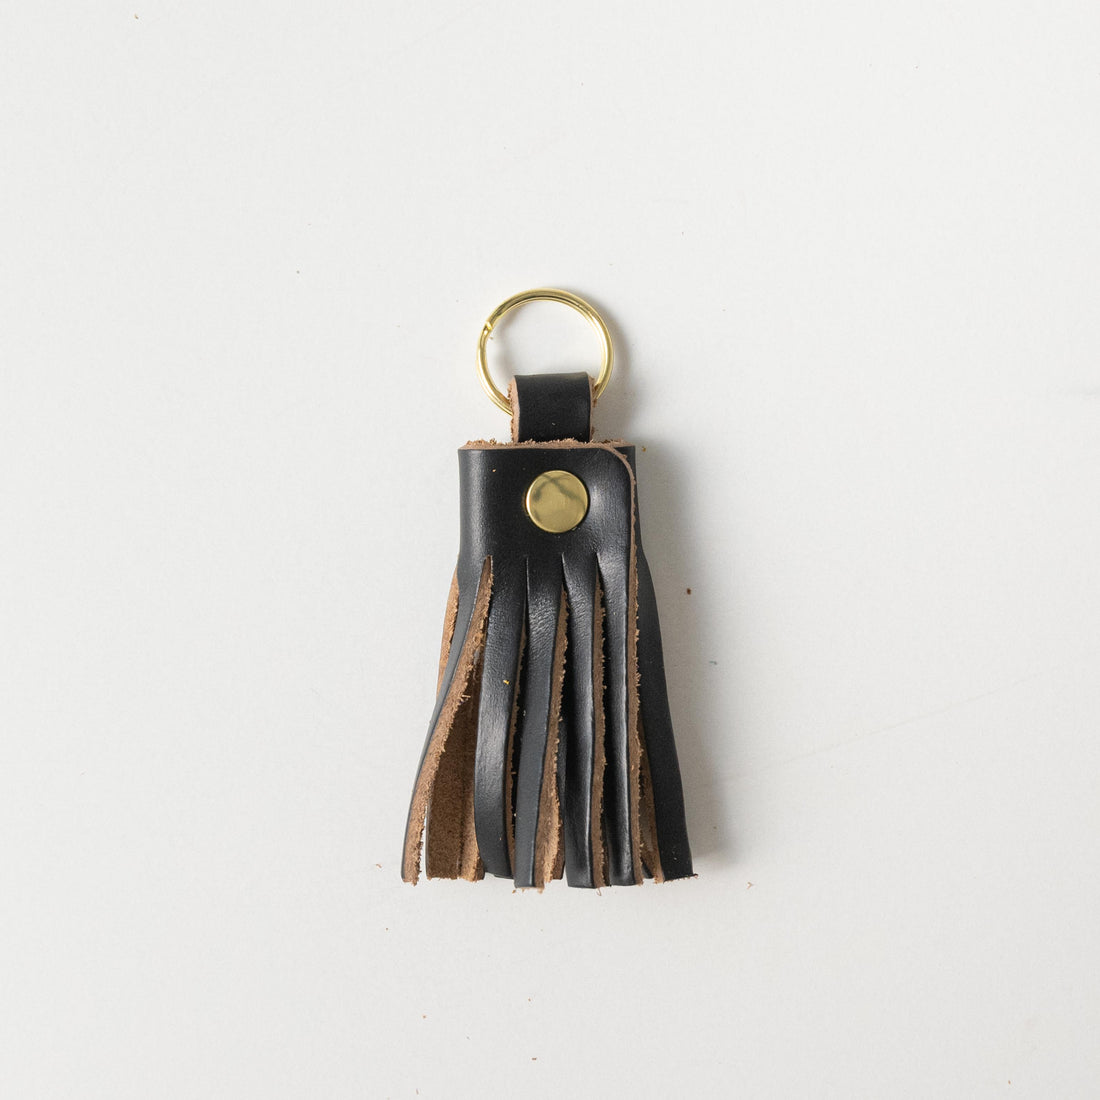 Andar The Tassel Keychain, Jet Black, Small, Leather